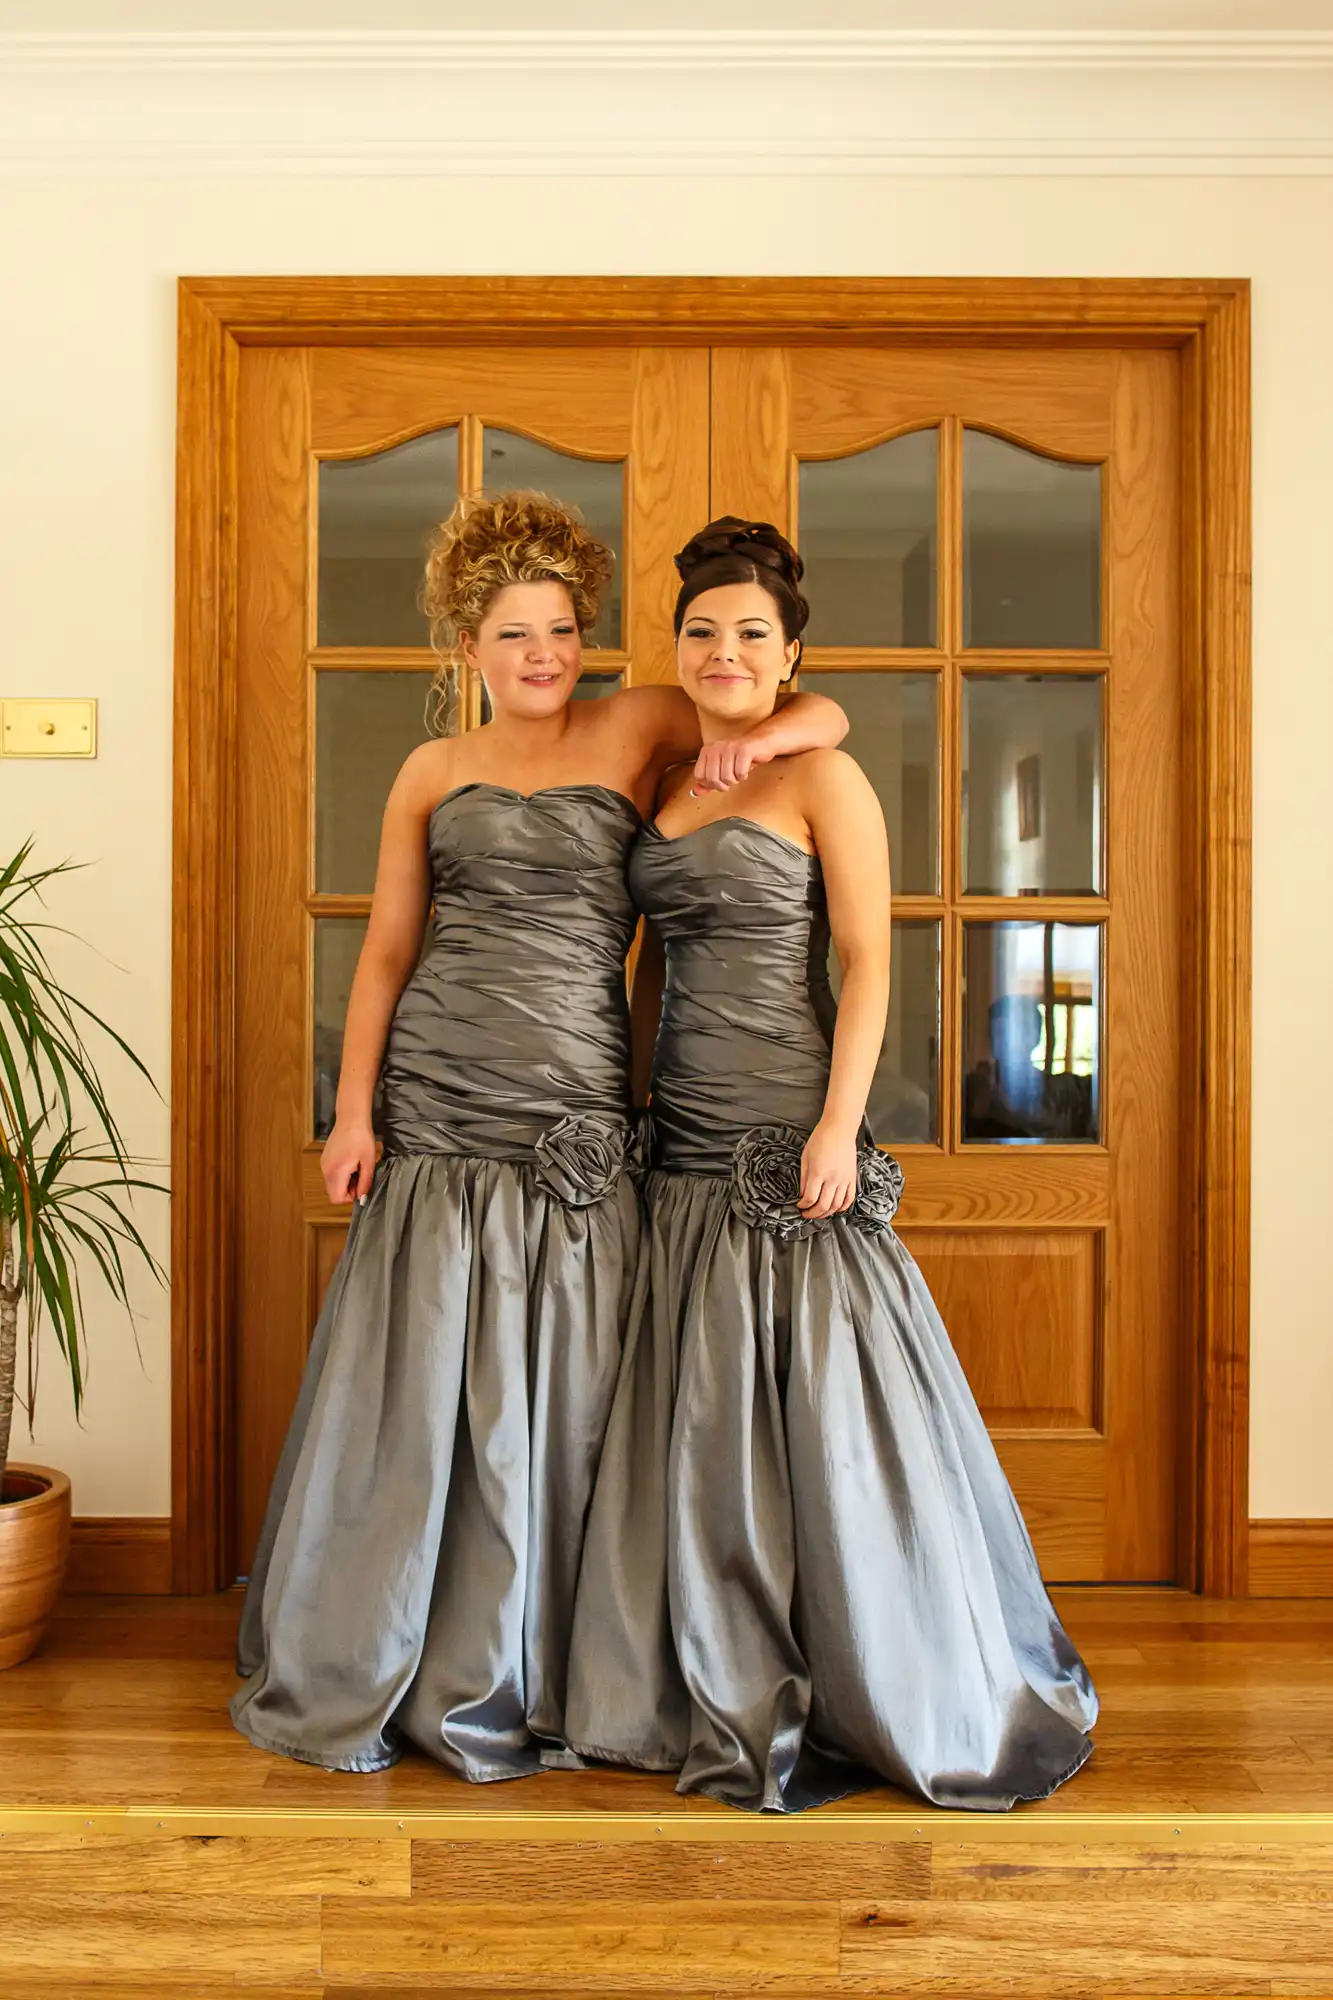 Two women in elegant gray ball gowns posing in front of wooden double doors.